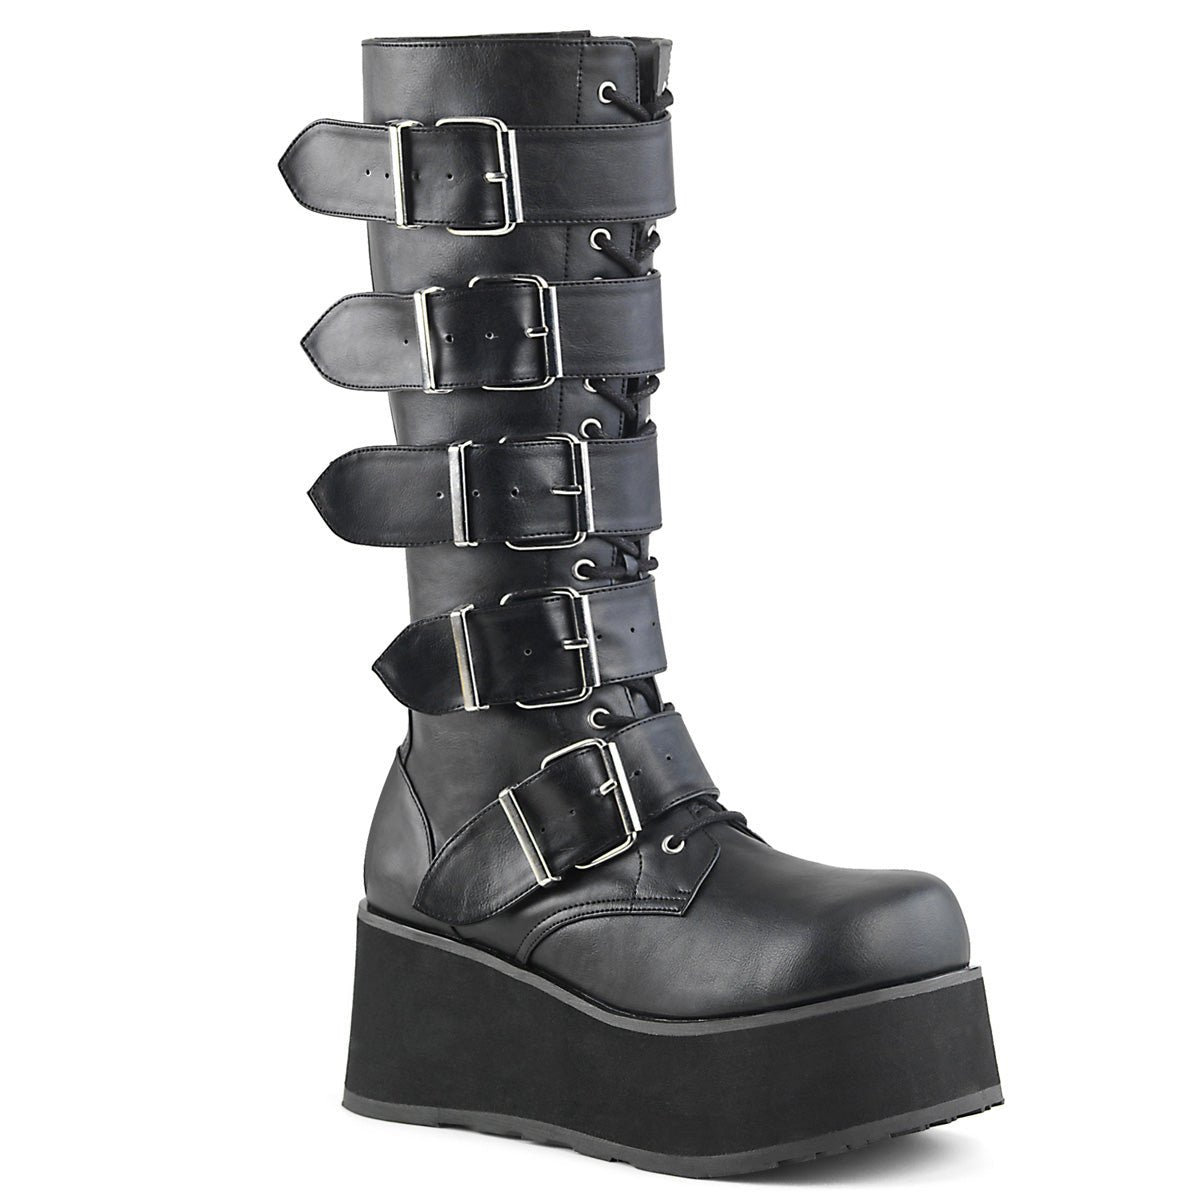 DemoniaCult TRASHVILLE 518 Platform Boots - From DemoniaCult Sold By Alternative Footwear